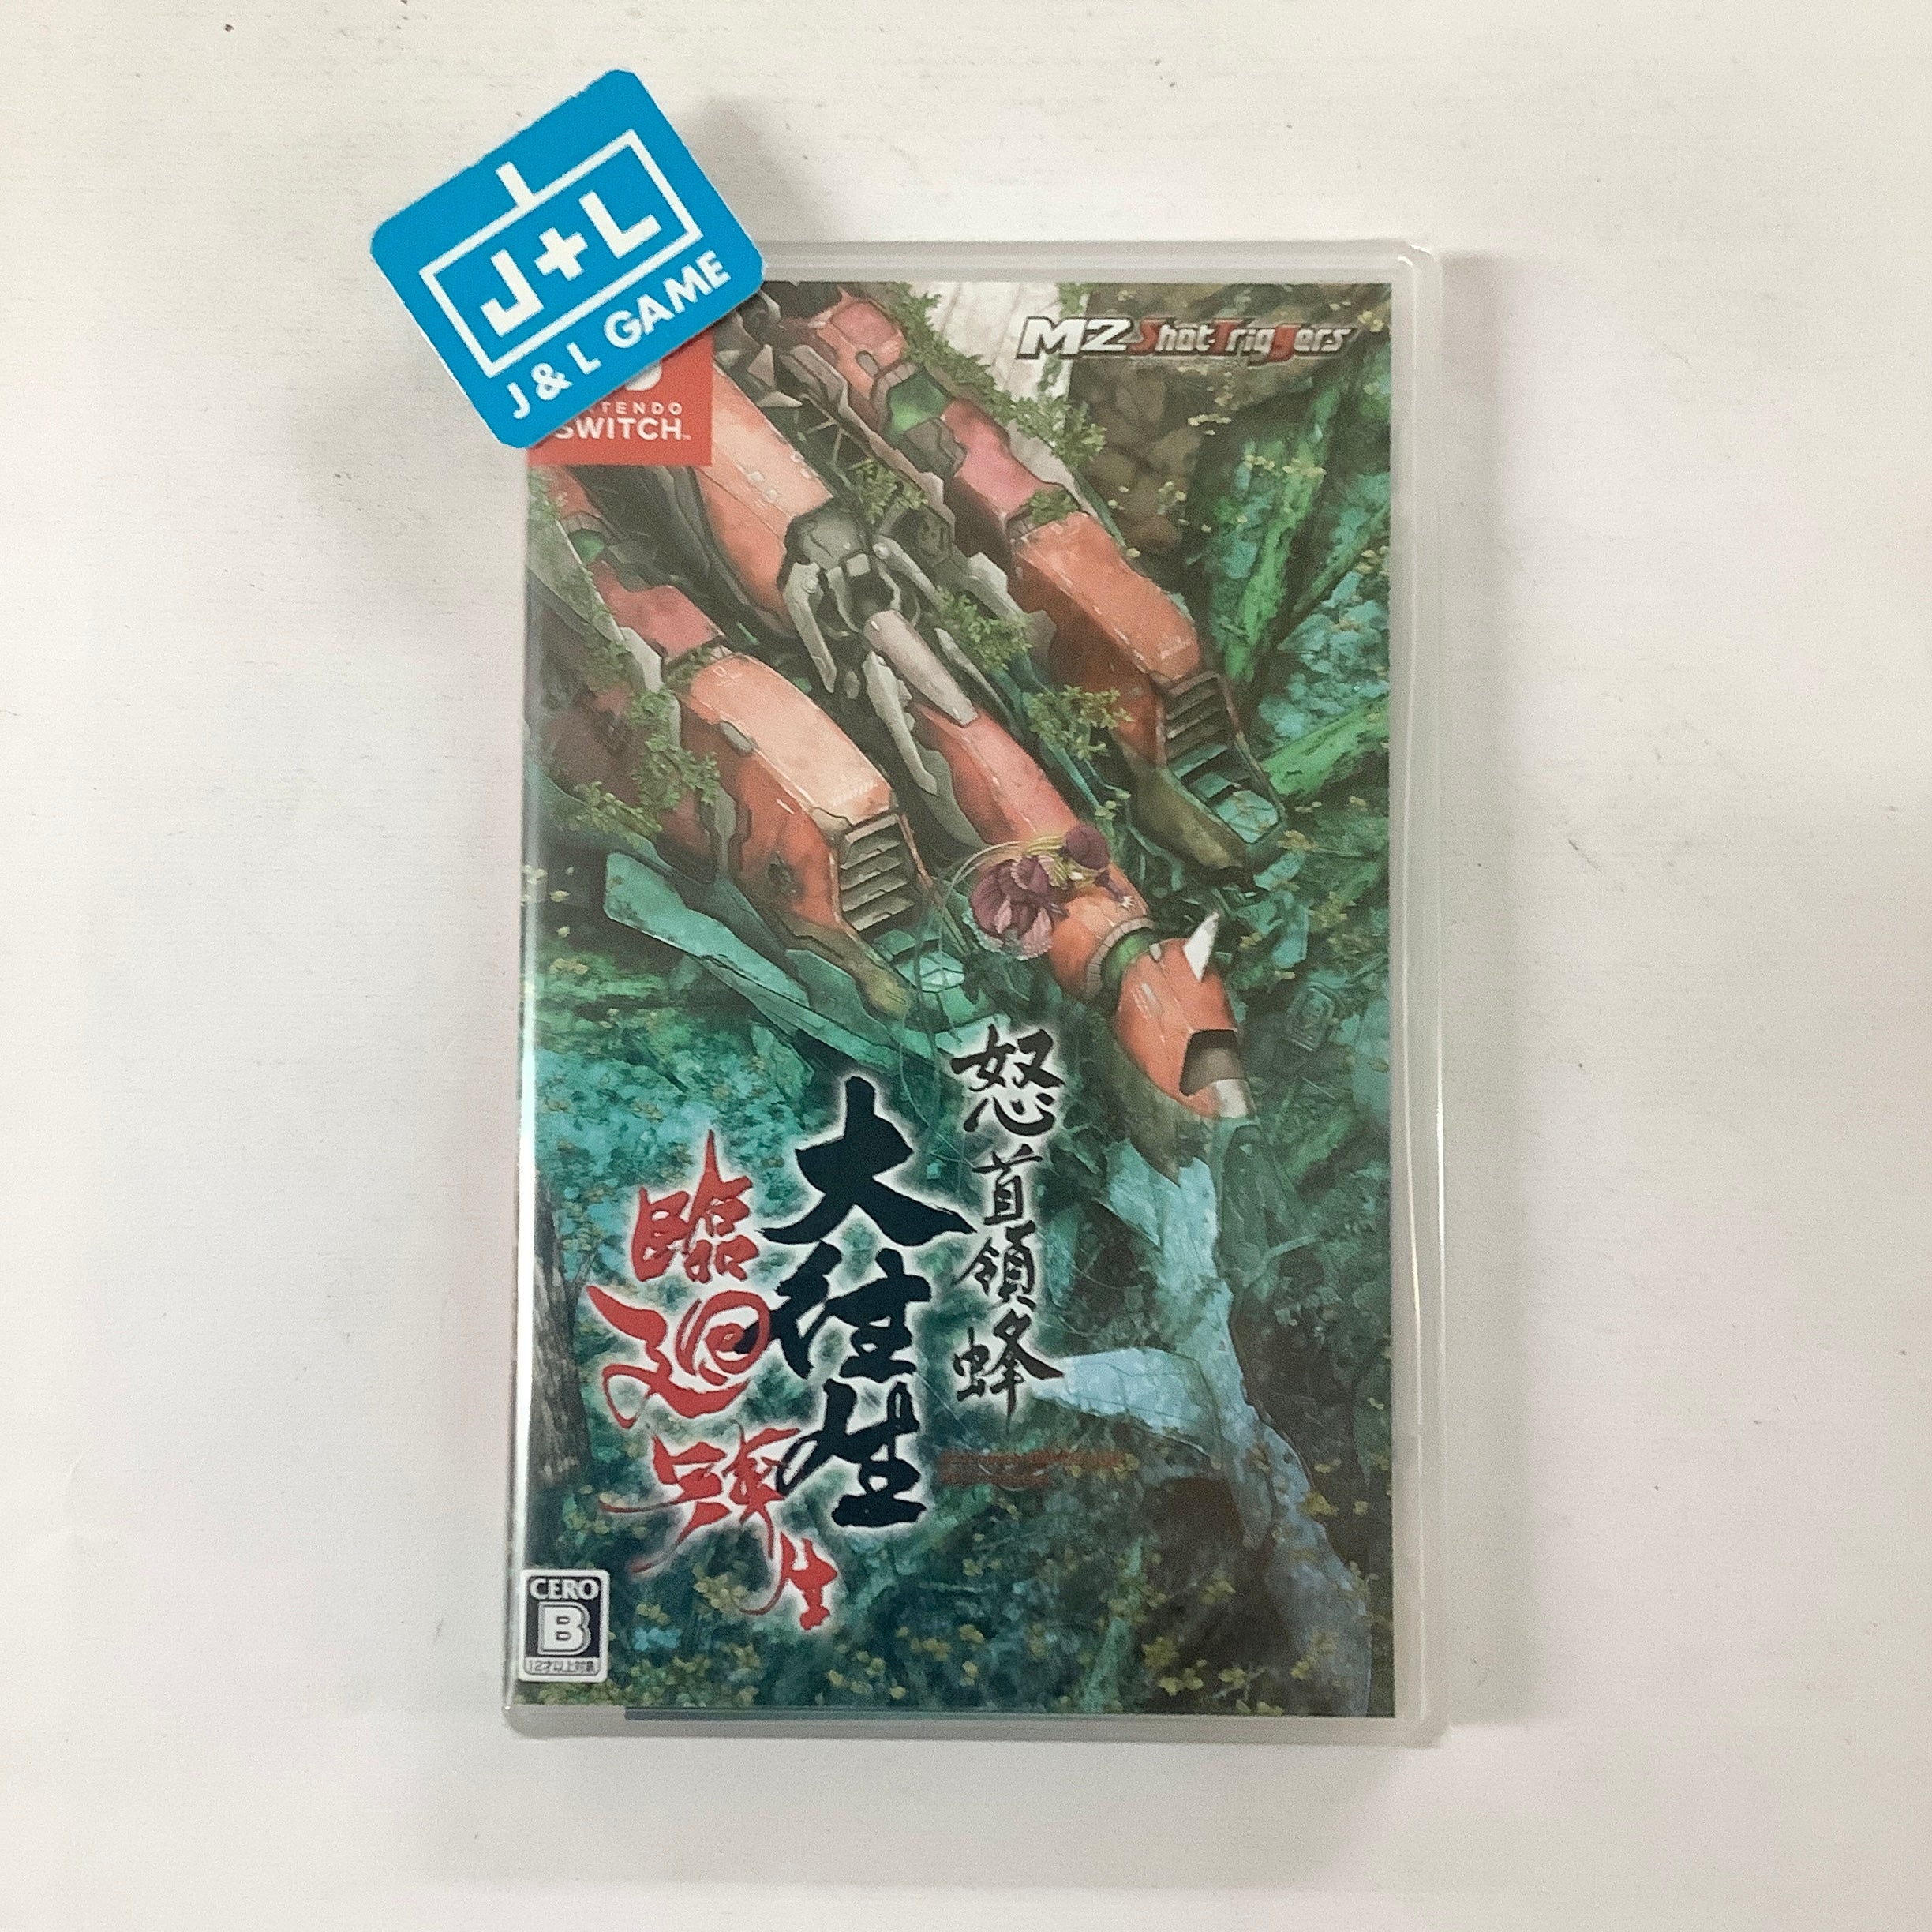 DoDonPachi Blissful Death Re:Incarnation - (NSW) Nintendo Switch (Japanese Import) Video Games M2   